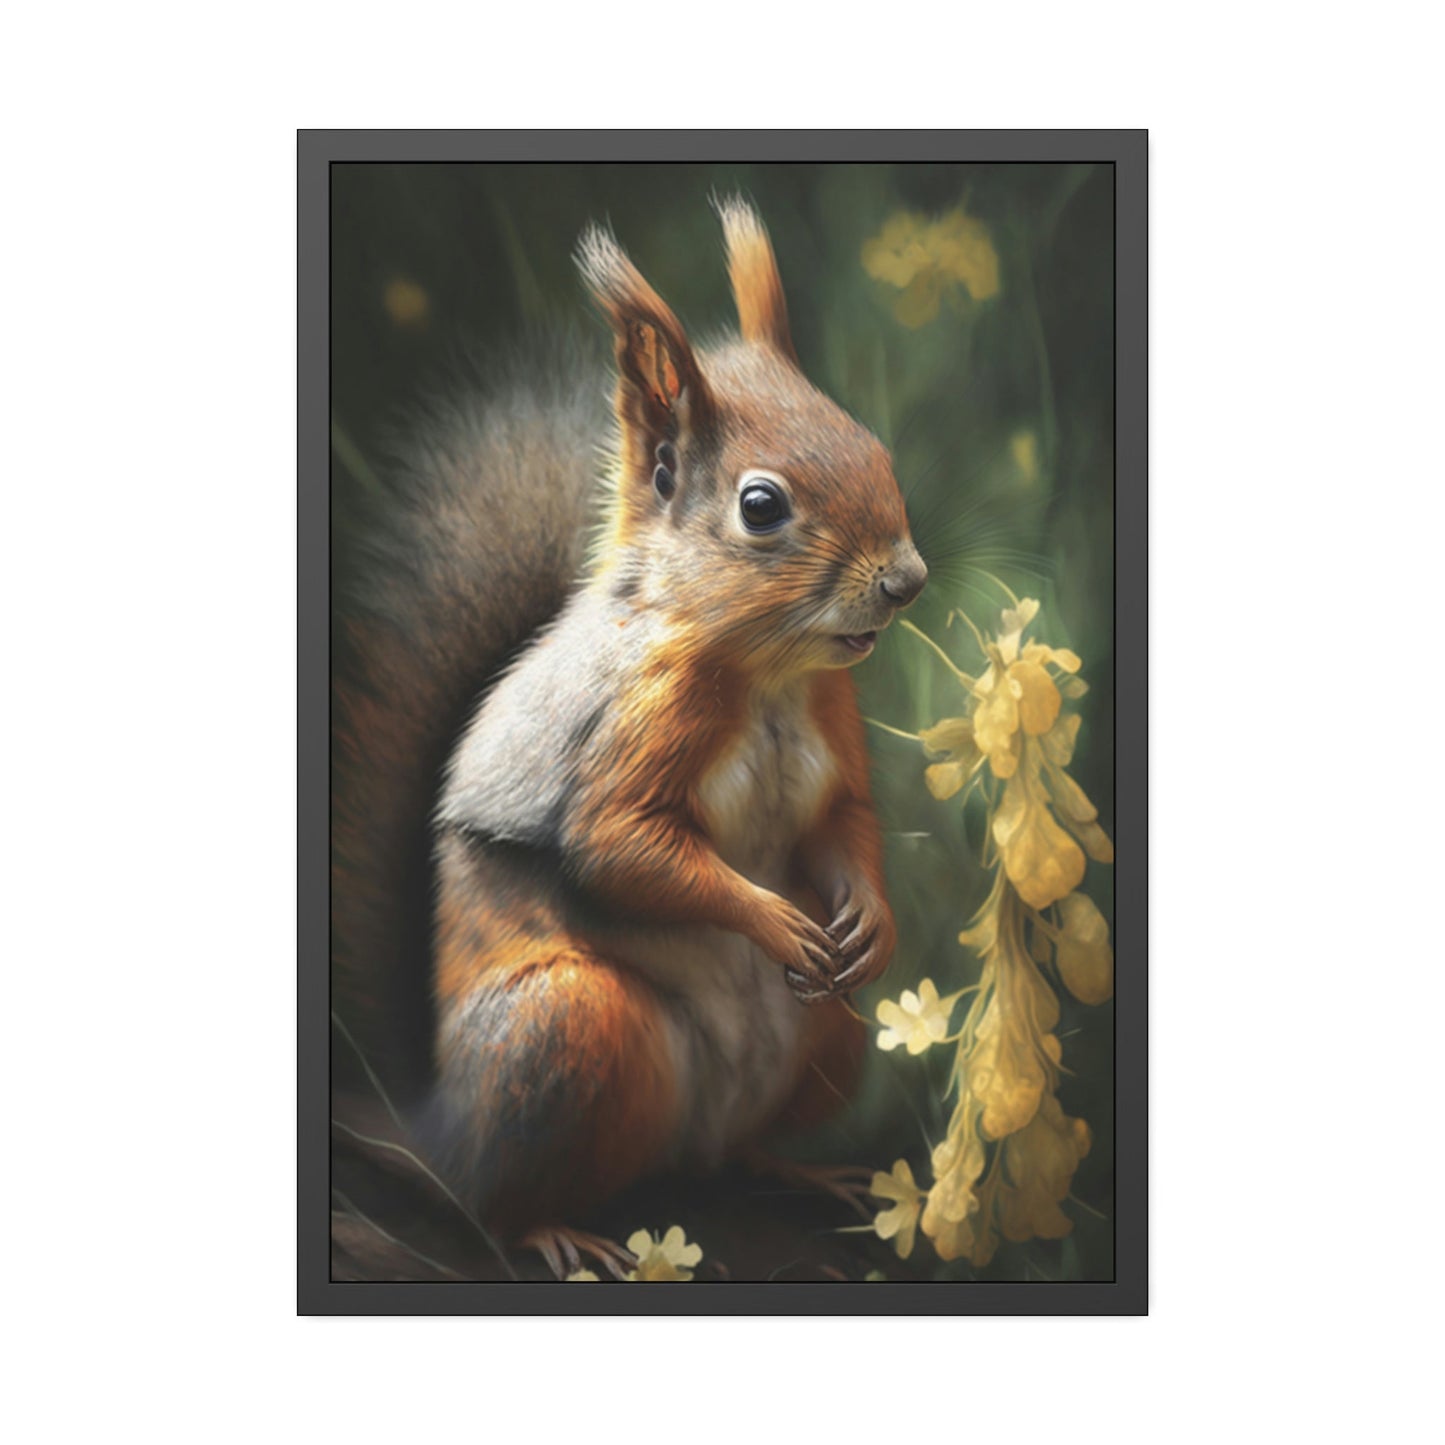 Autumn Harvest: A Squirrel's Bounty